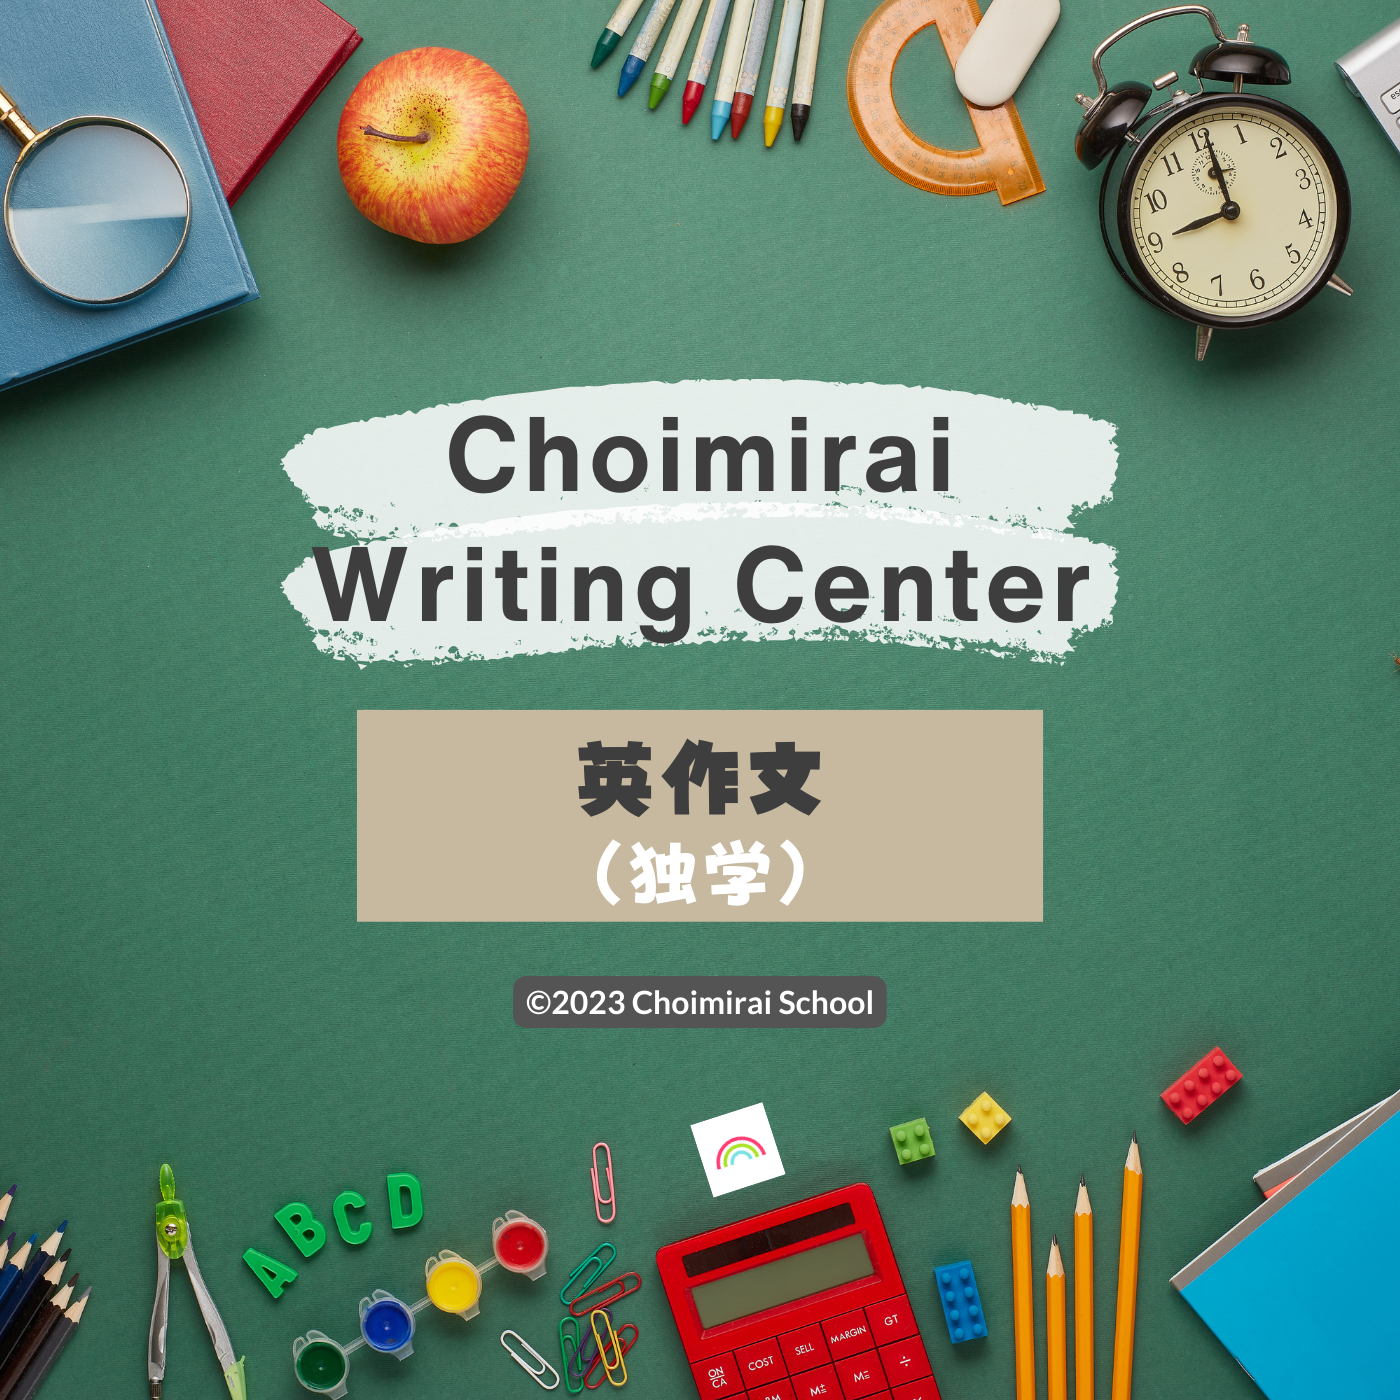 Choimirai Writing Center: 英作文（独学）